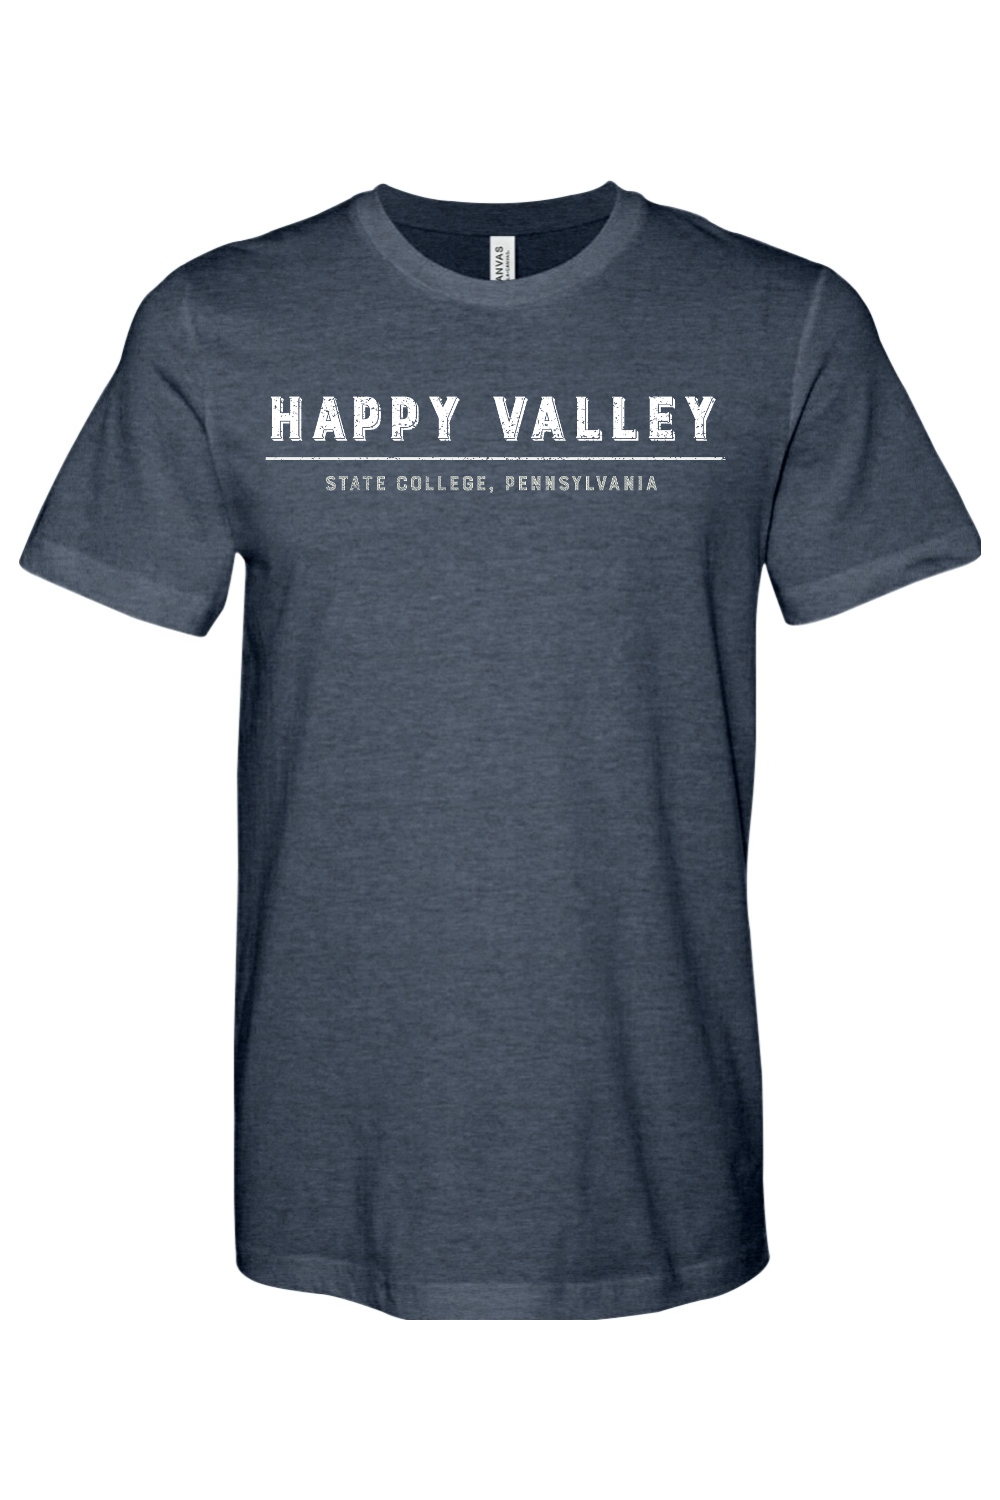 Happy Valley - State College, Pennsylvania - Yinzylvania